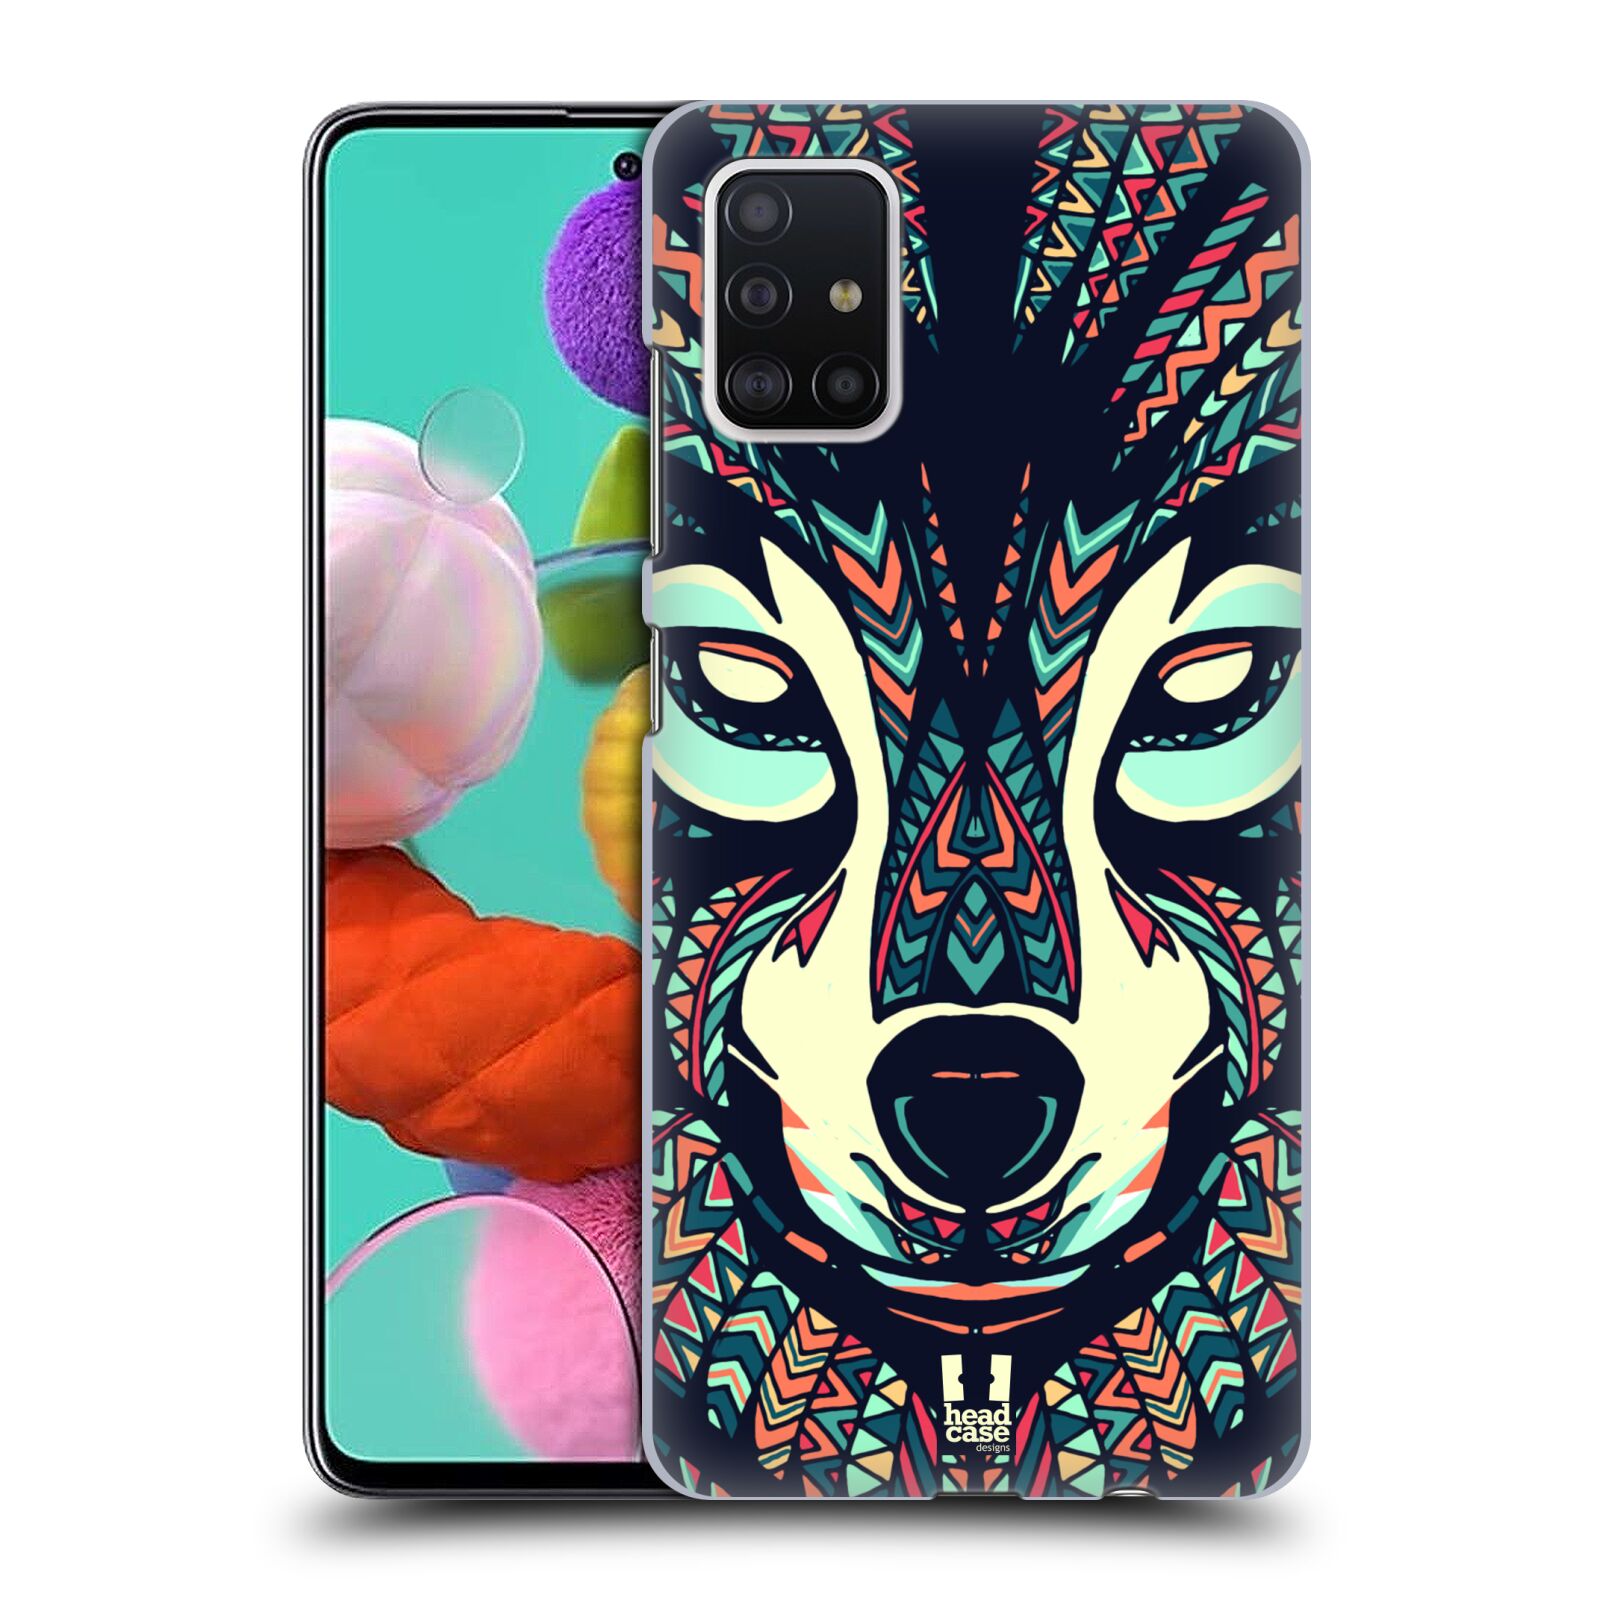 Pouzdro na mobil Samsung Galaxy A51 - HEAD CASE - vzor Aztécký motiv zvíře 3 vlk